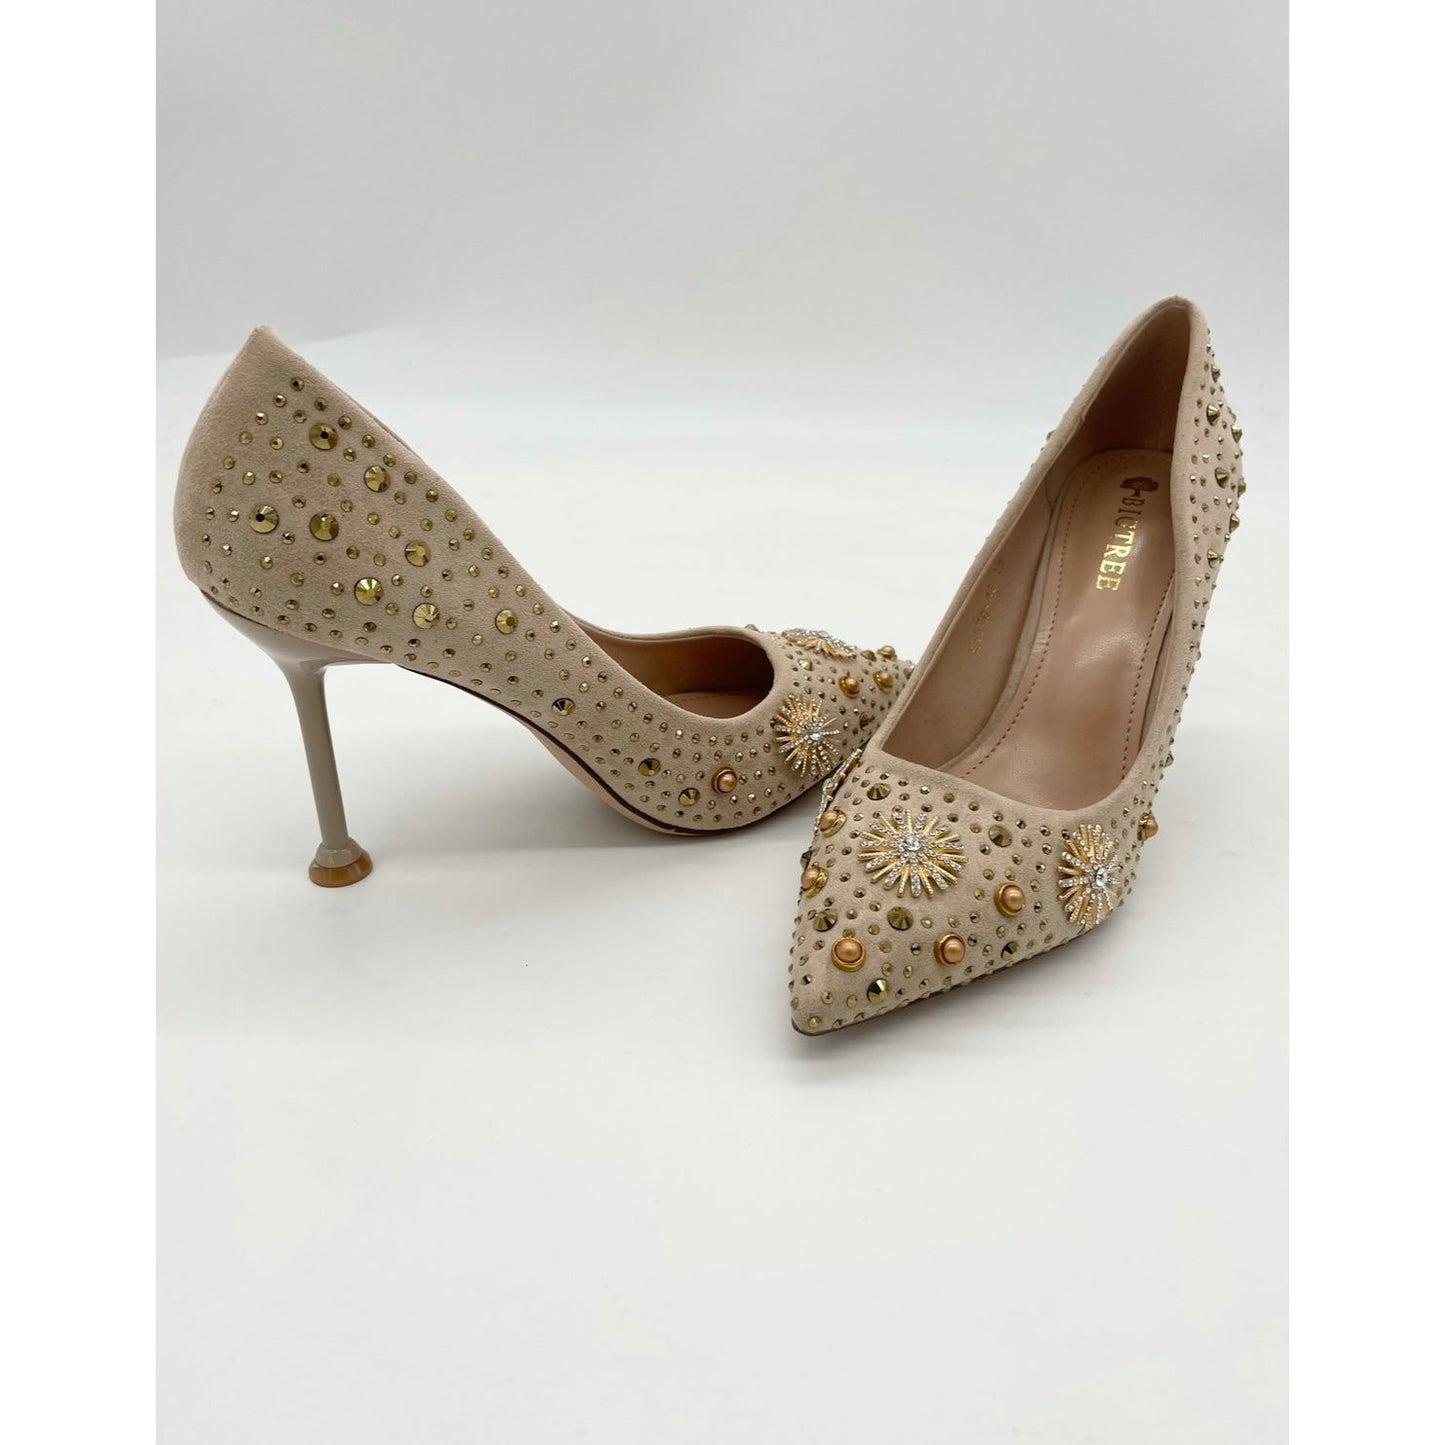 Beige/gold star heels